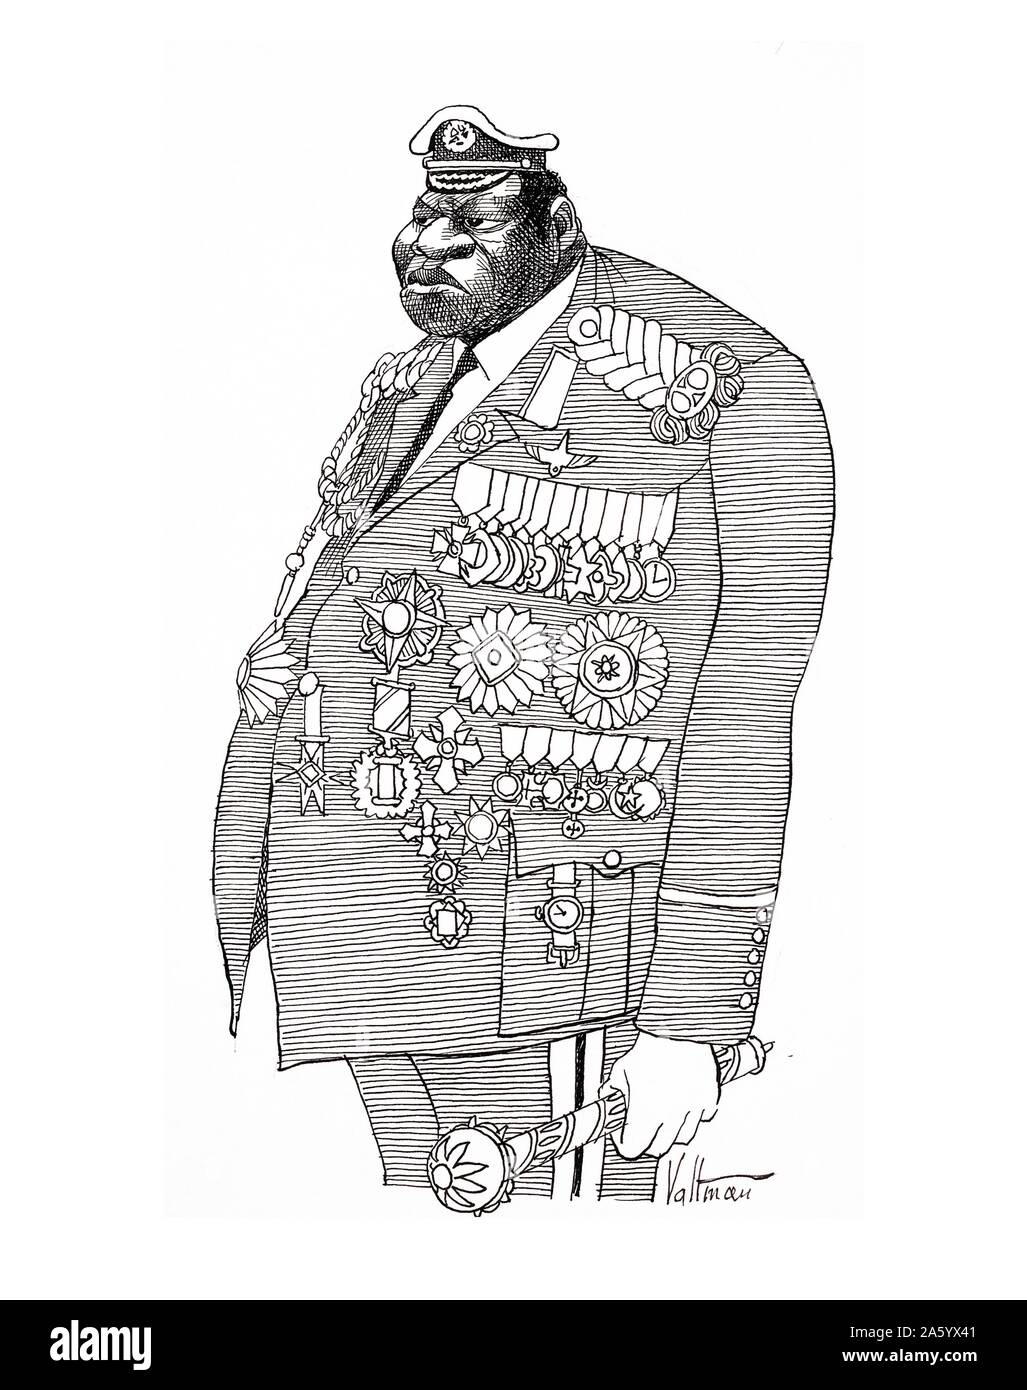 Caricature montrant Field Marshall, Idi Amin Dada (ch. 1925 - 16 août 2003) Président de l'Ouganda, de 1971 à 1979. Banque D'Images